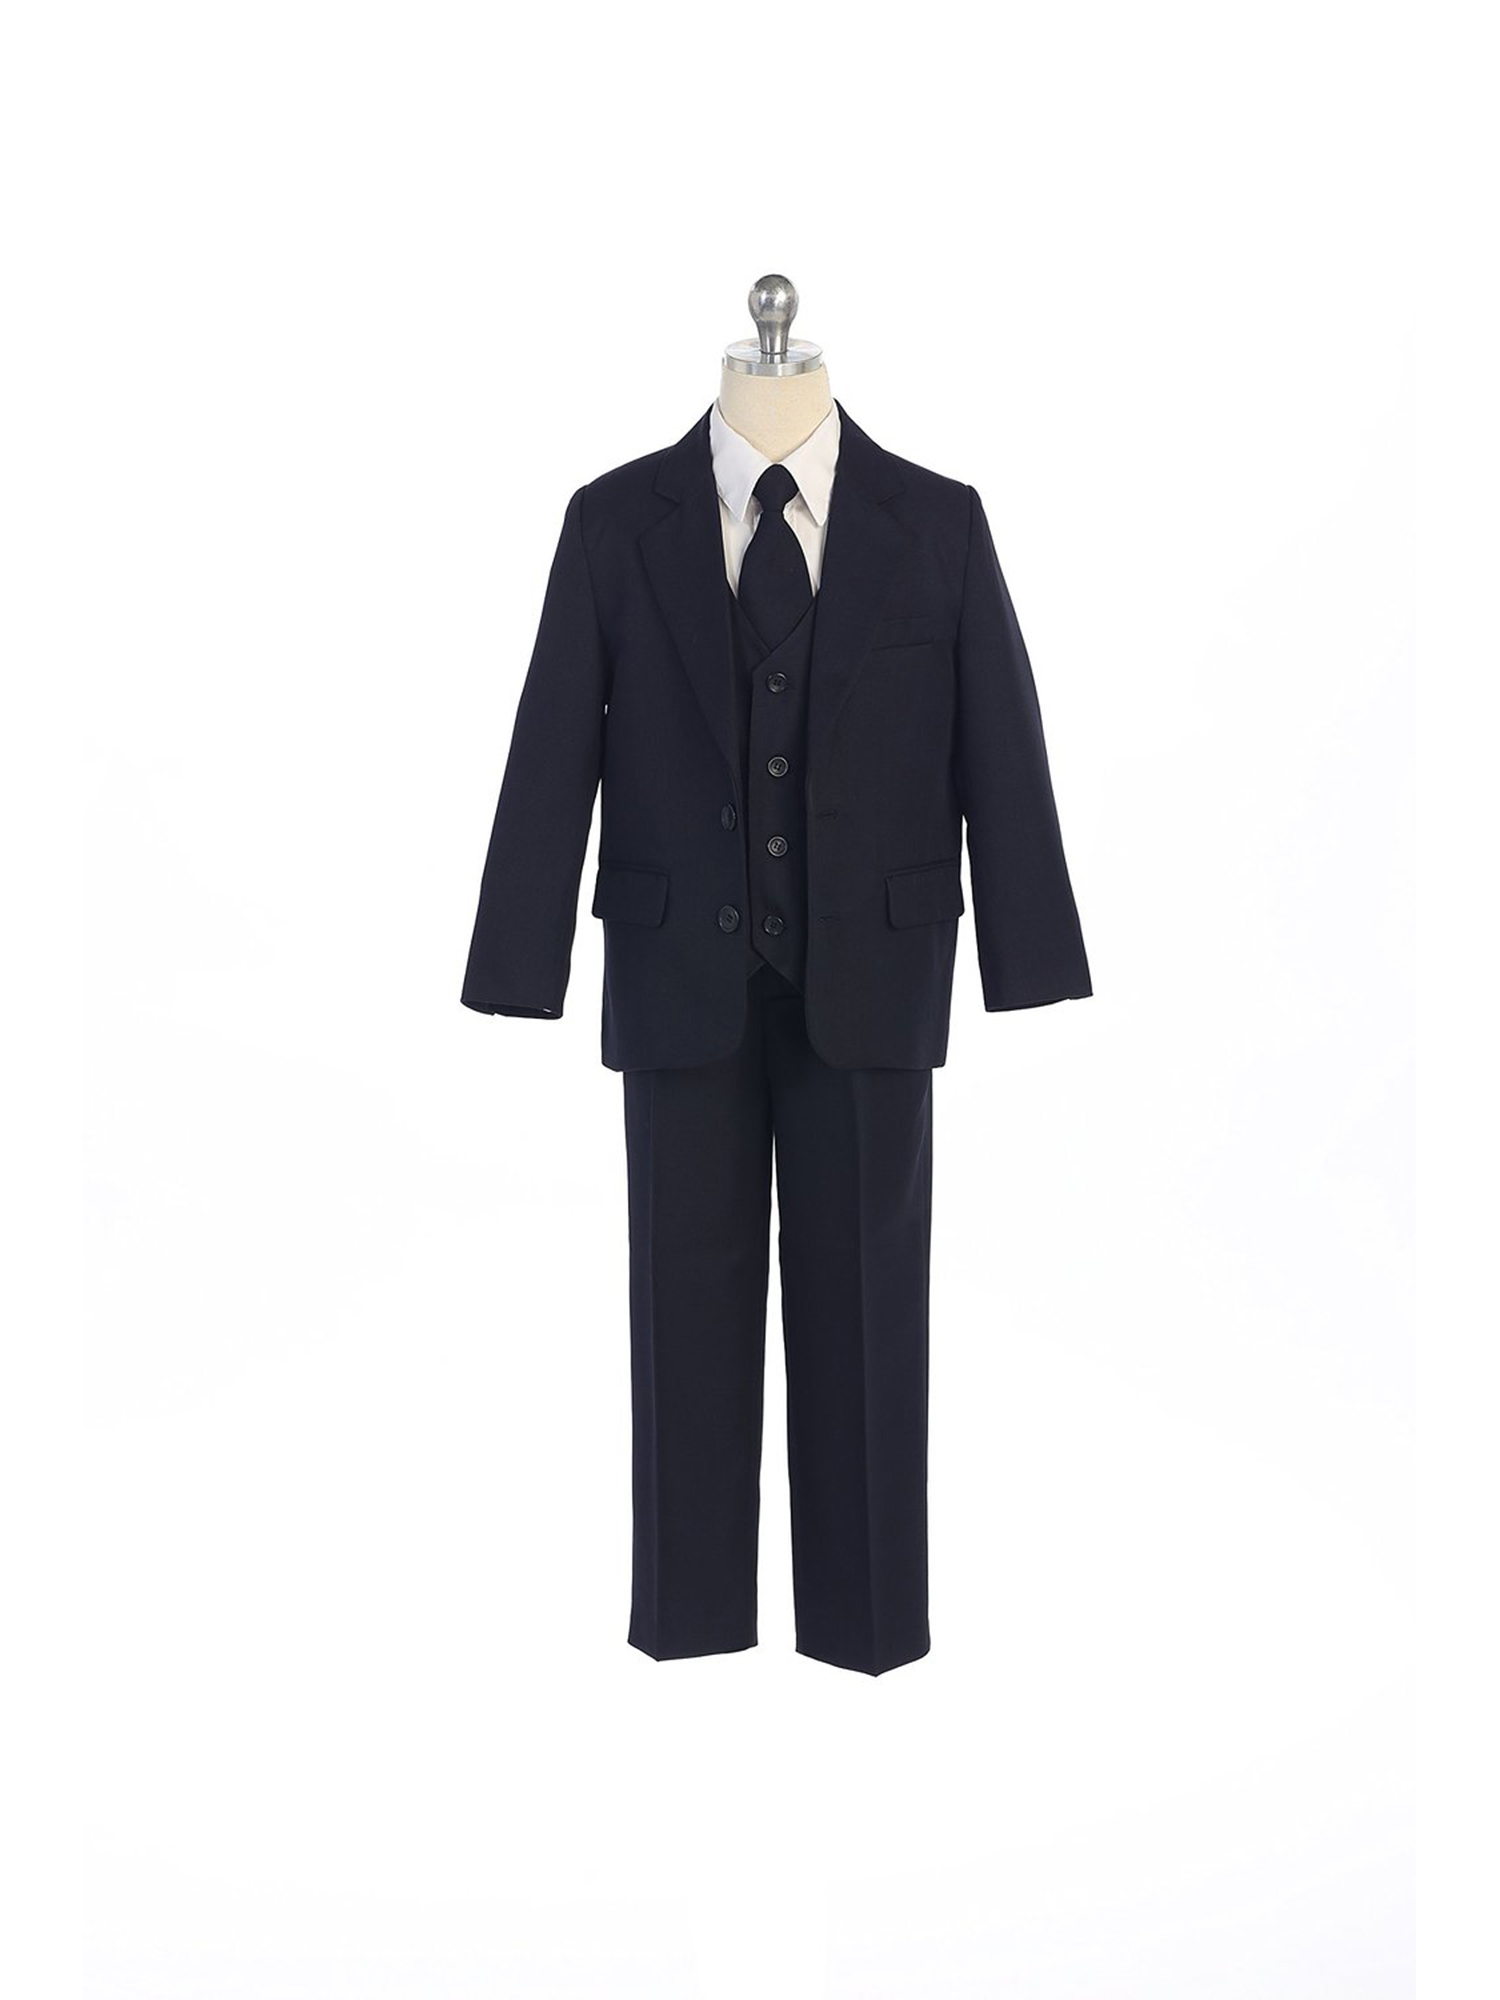 COLE Boys Suit with Shirt and Vest (5-Piece) - Navy Blue - Size 1